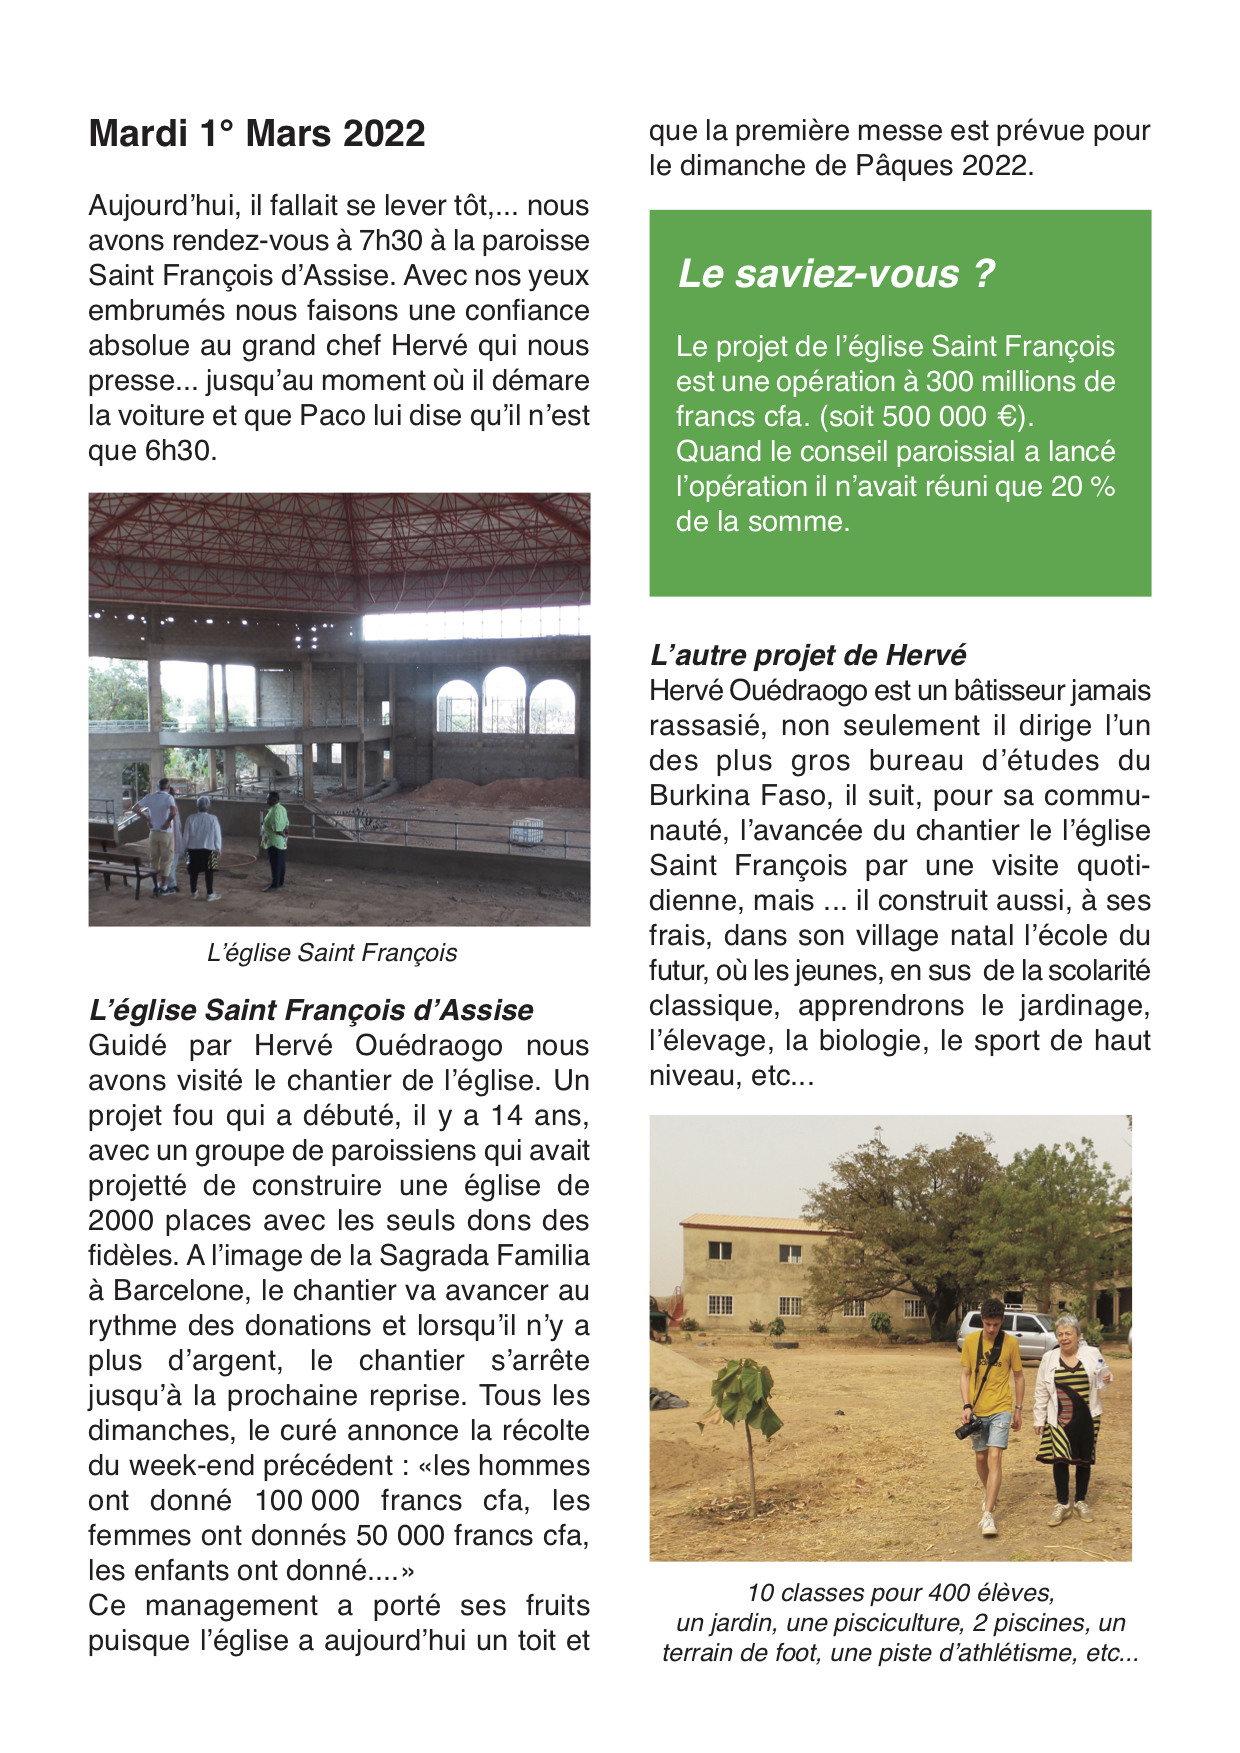 Journal de voyage au Burkina Faso - Mardi 1er au jeudi 3 mars 2022 - page 1